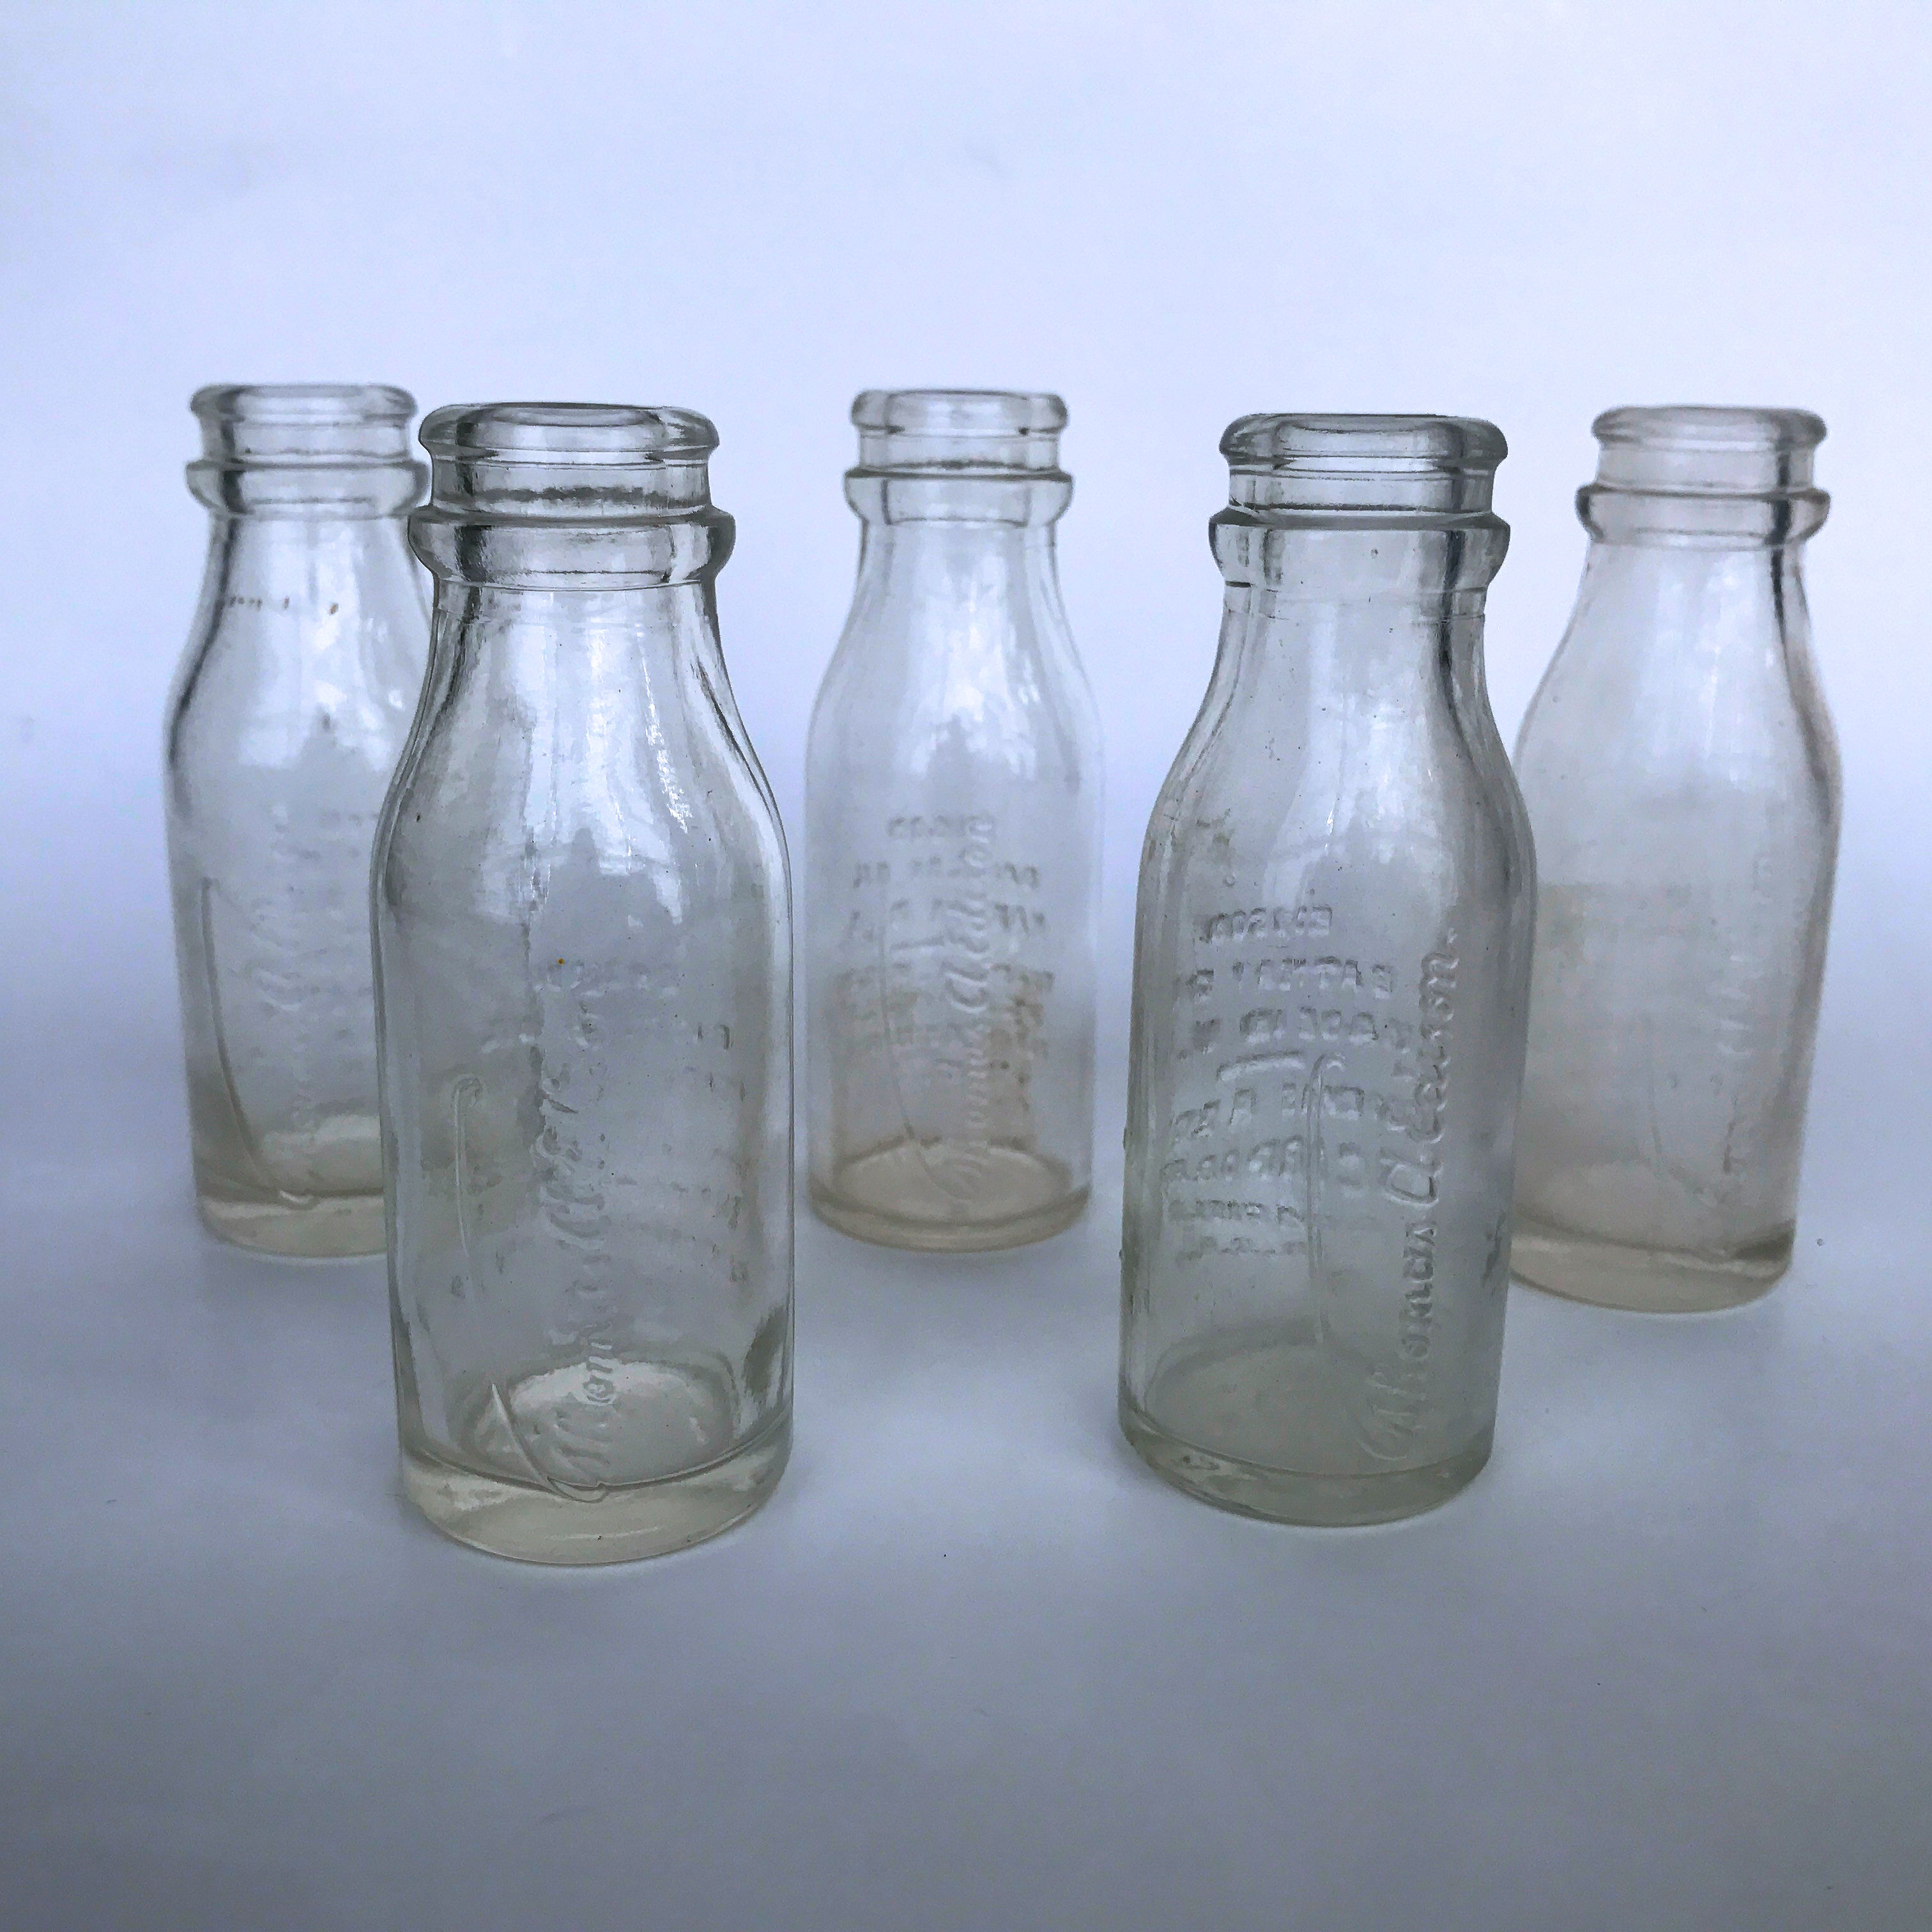 Vintage Glass Thomas A Edison Battery Oil Bottles Lot of 5 Bloomfield ...